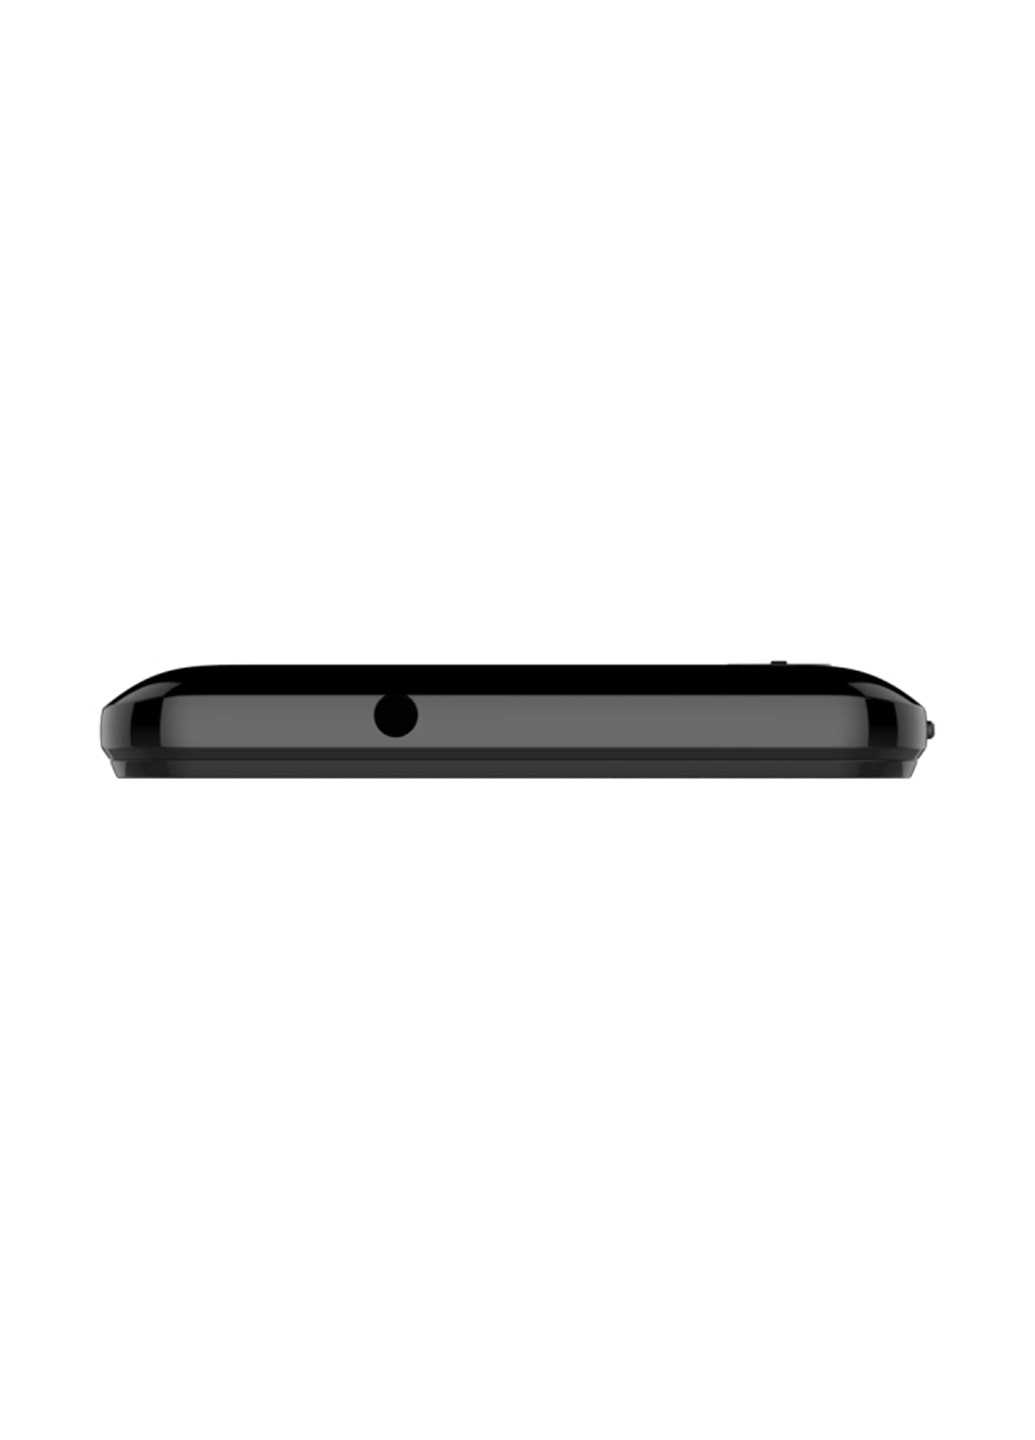 Смартфон BLADE A5 2 / 16GB Black ZTE blade a5 2/16gb black (133603430)